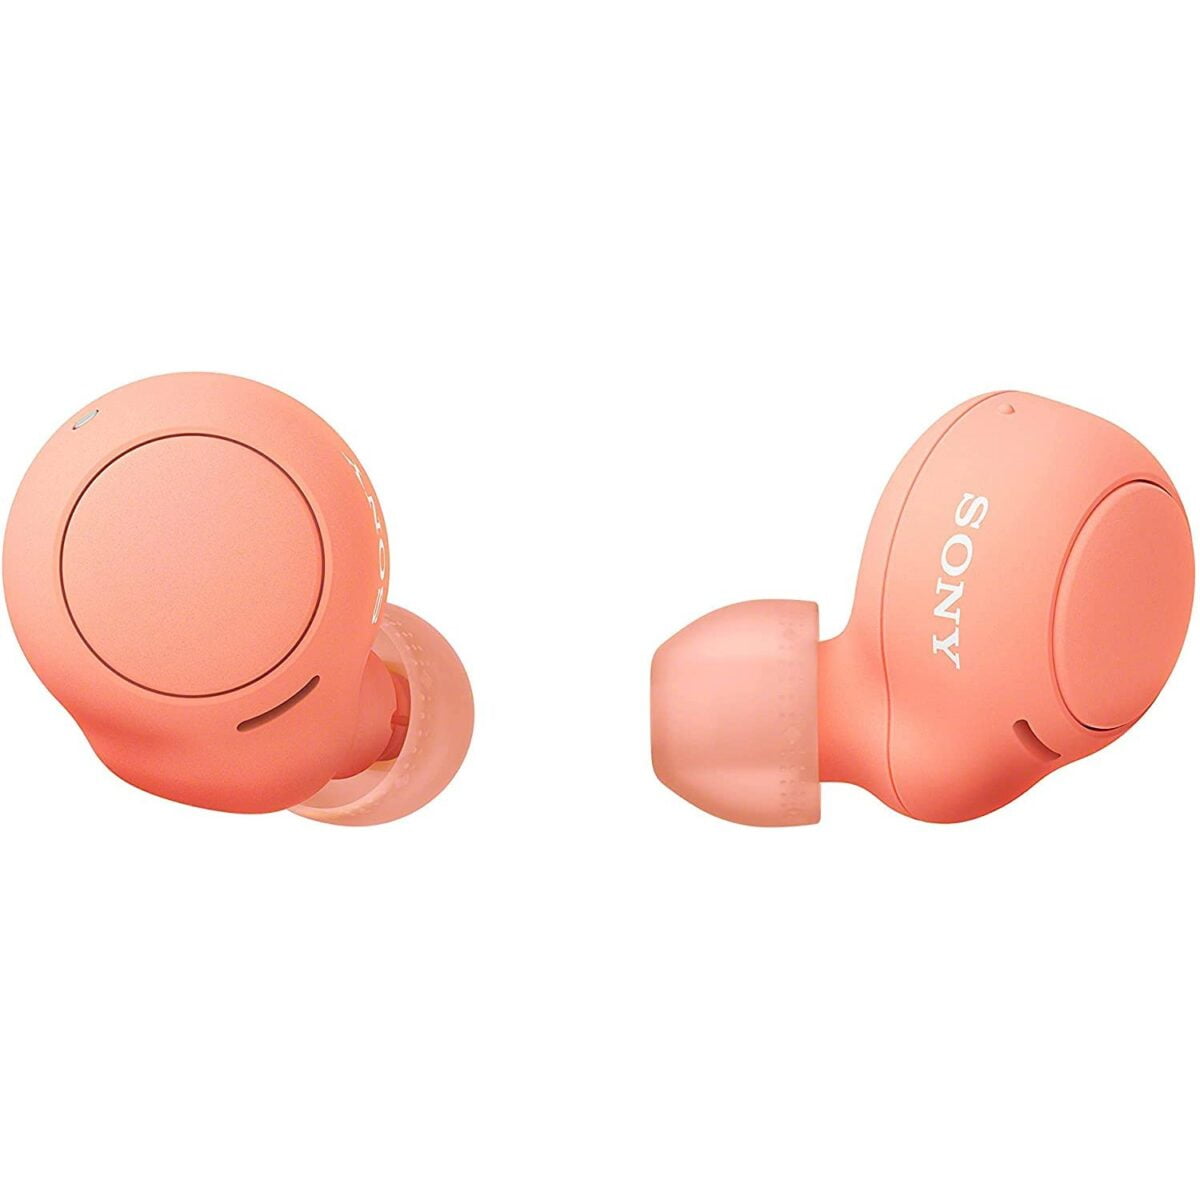 Sony wf c500 bluetooth truly wireless in ear earbuds 1